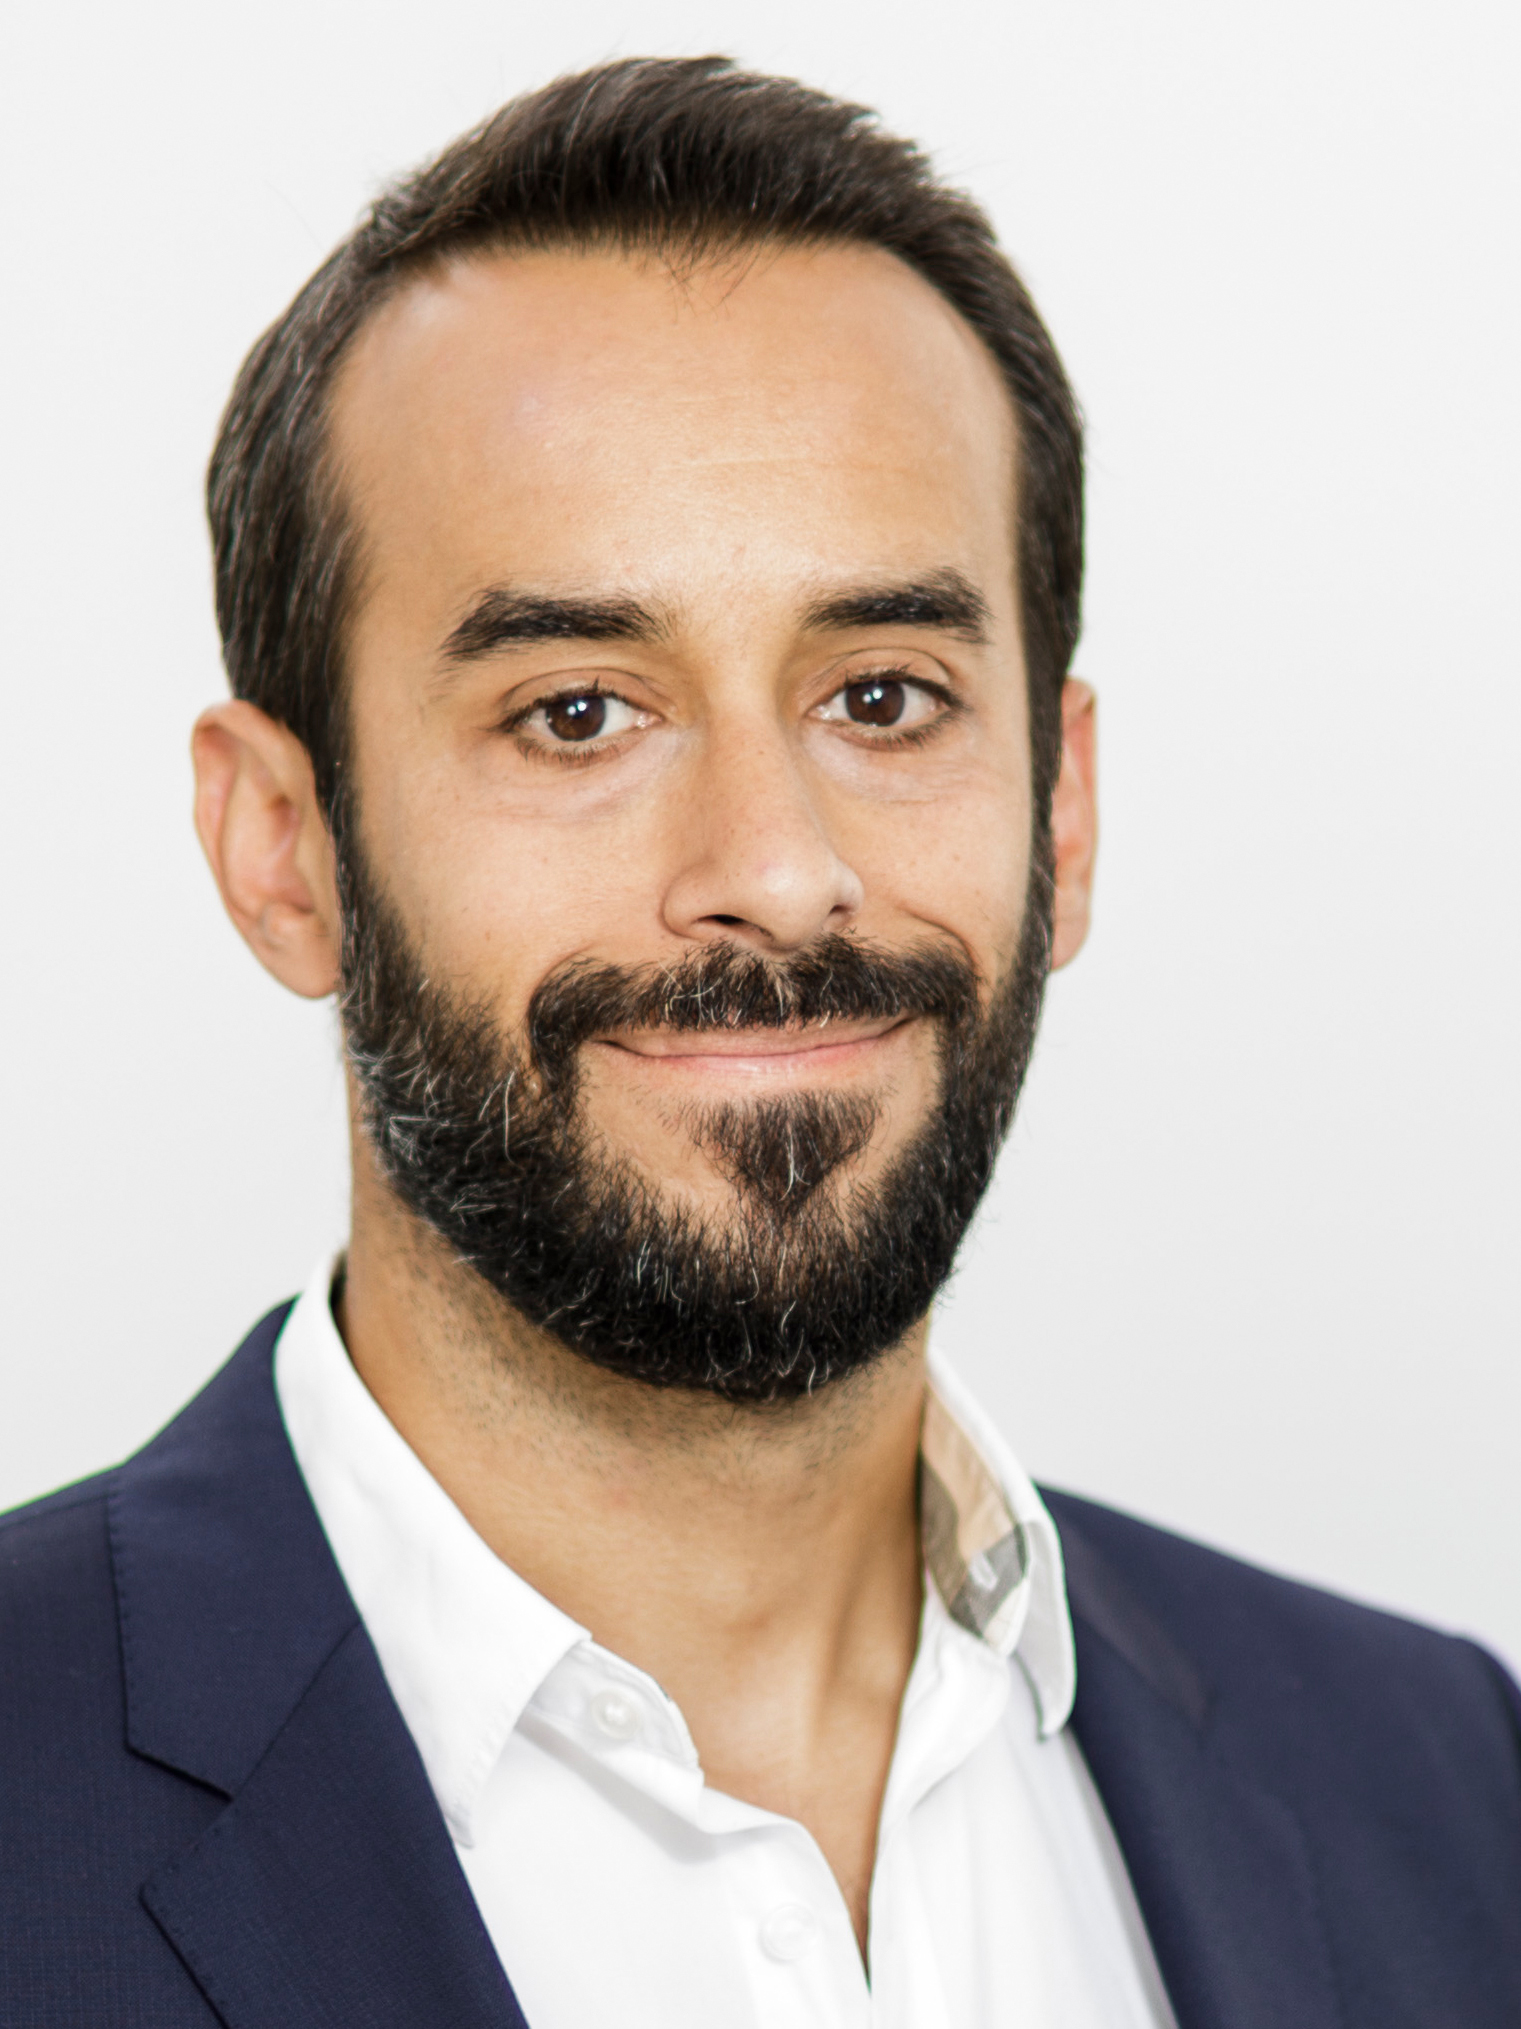 César R. Martínez Pereyra  Senior Marketing & Communications Manager, Profion GmbH, Munich  MBA Full-Time Graduate 2020